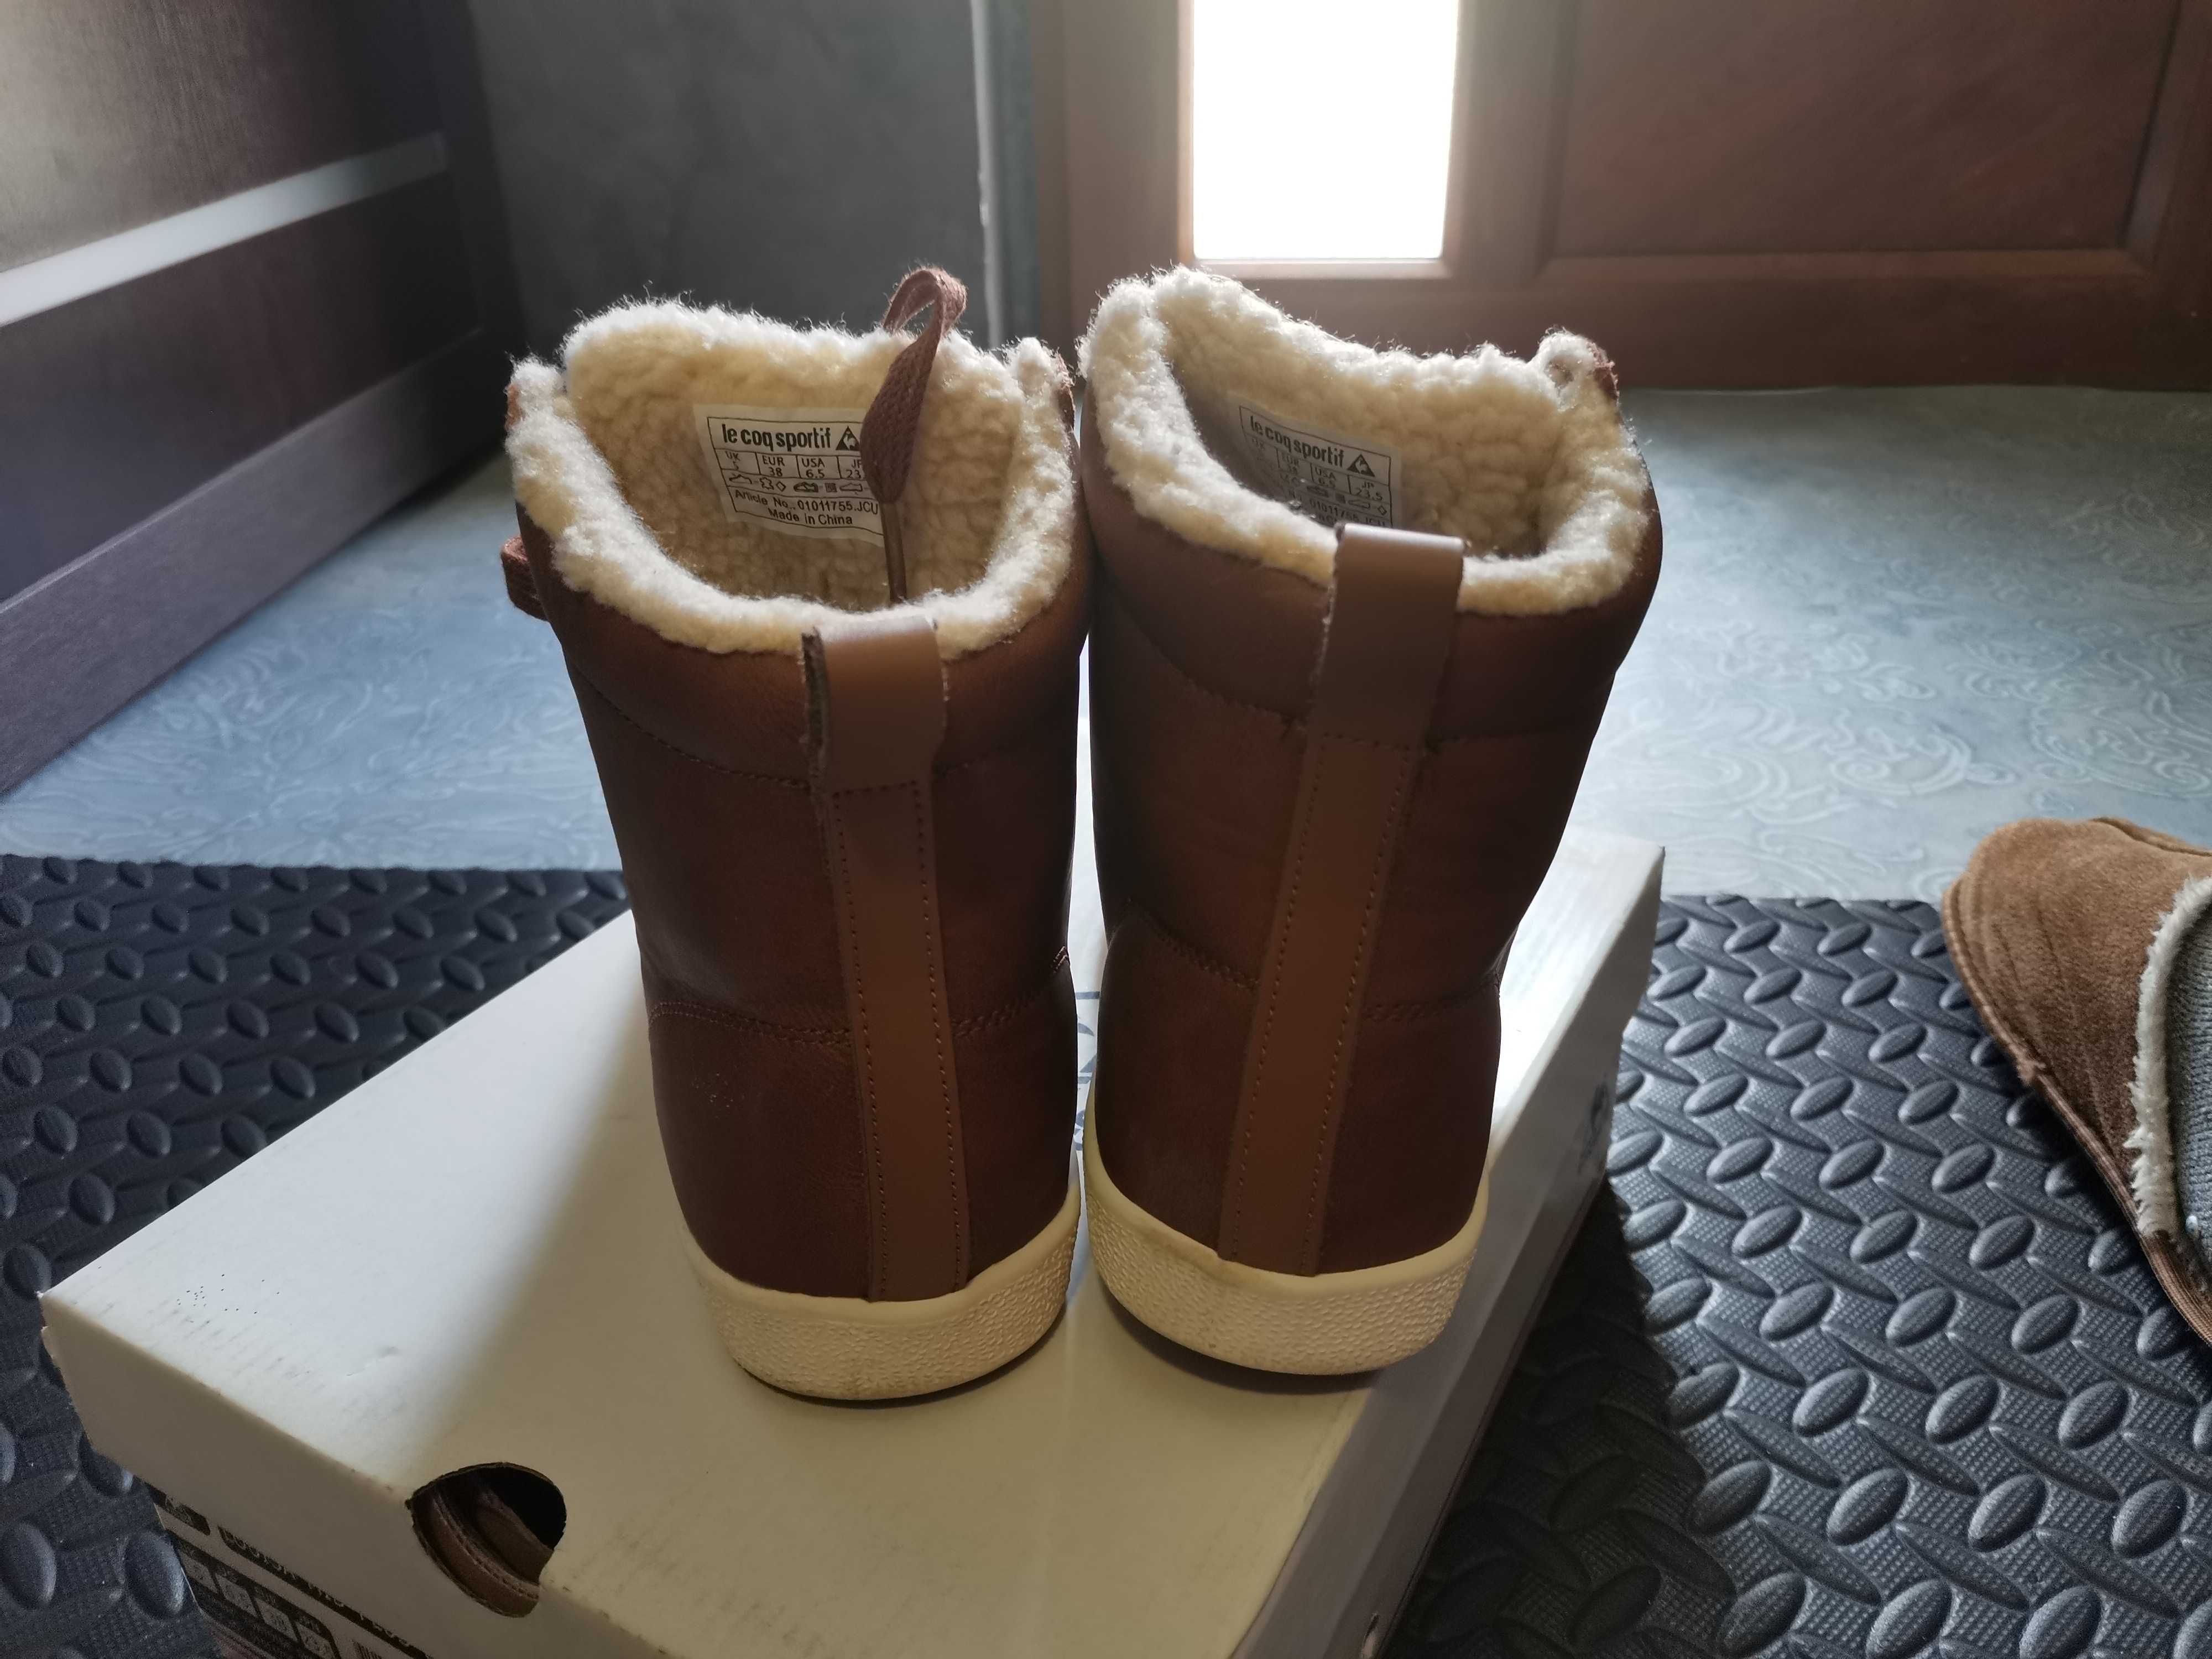 Топли зимни обувки